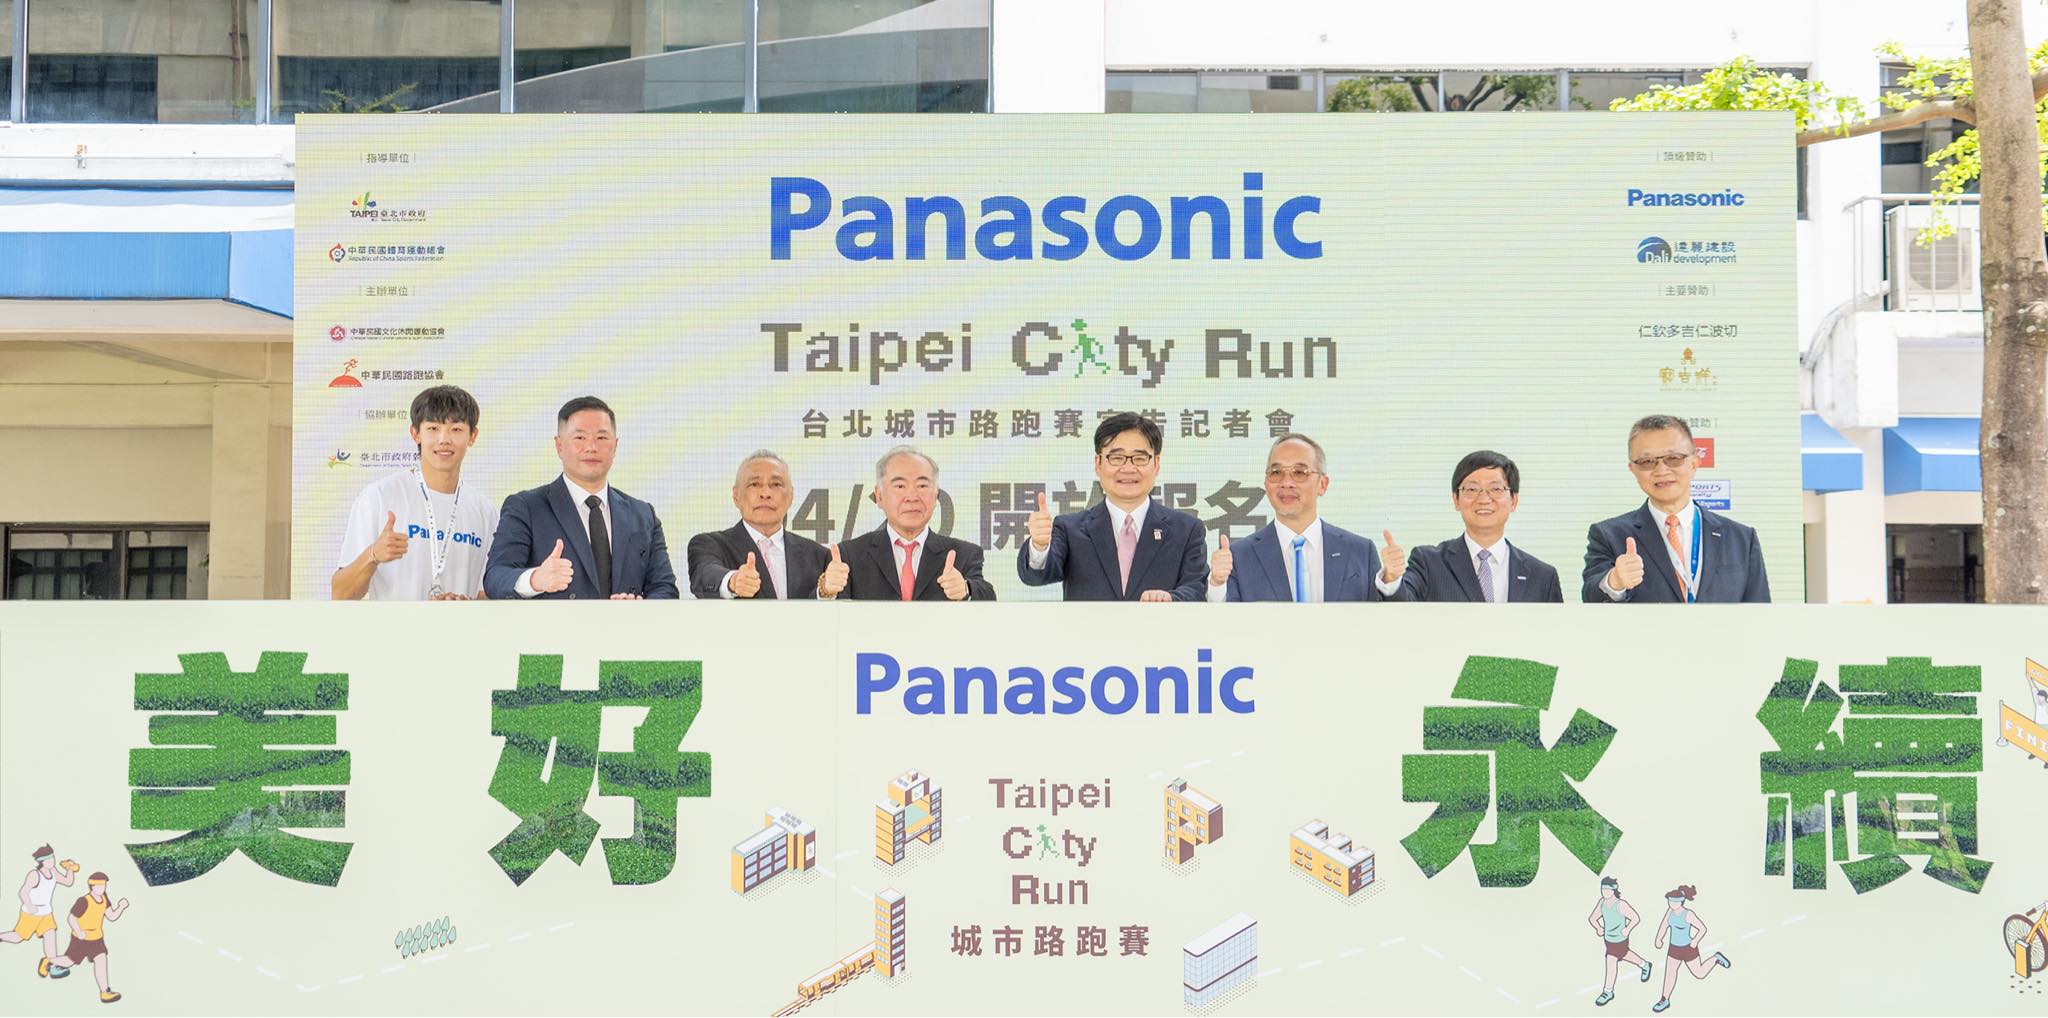 Panasonic連續四年參與台北城市路跑賽，4/20起開放報名，歡迎大家一起為永續而跑。